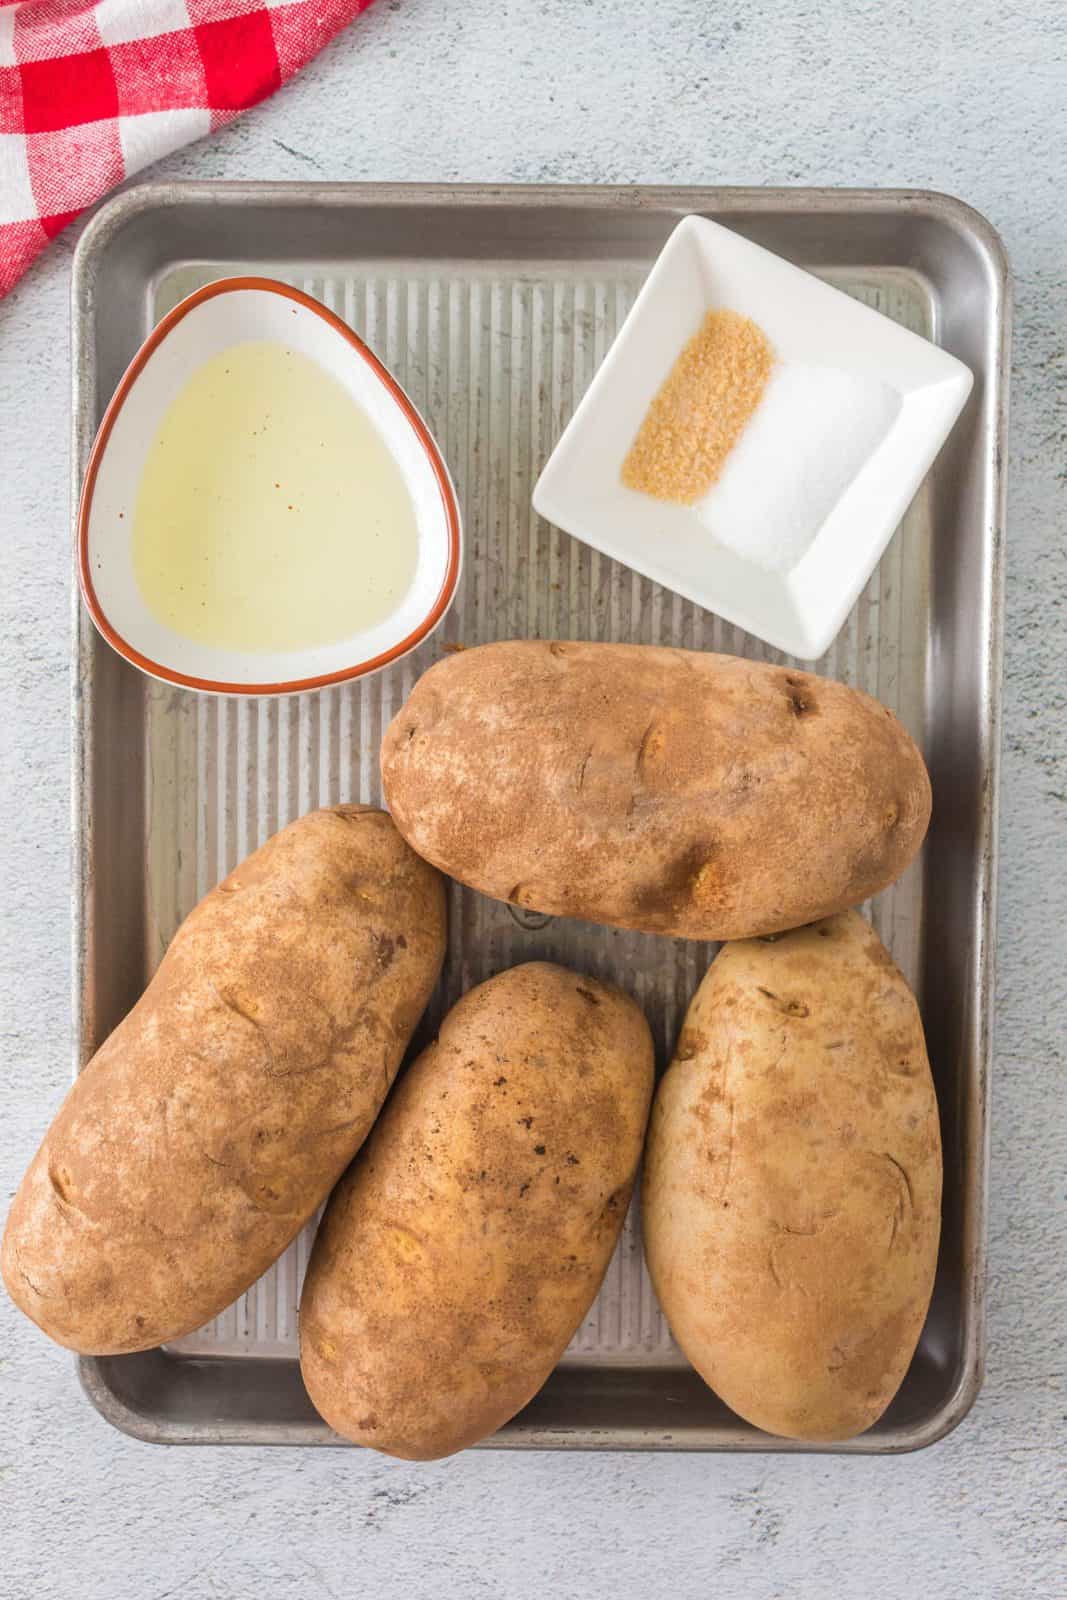 Ingredients needed: baking potatoes, olive oil, salt and garlic salt.